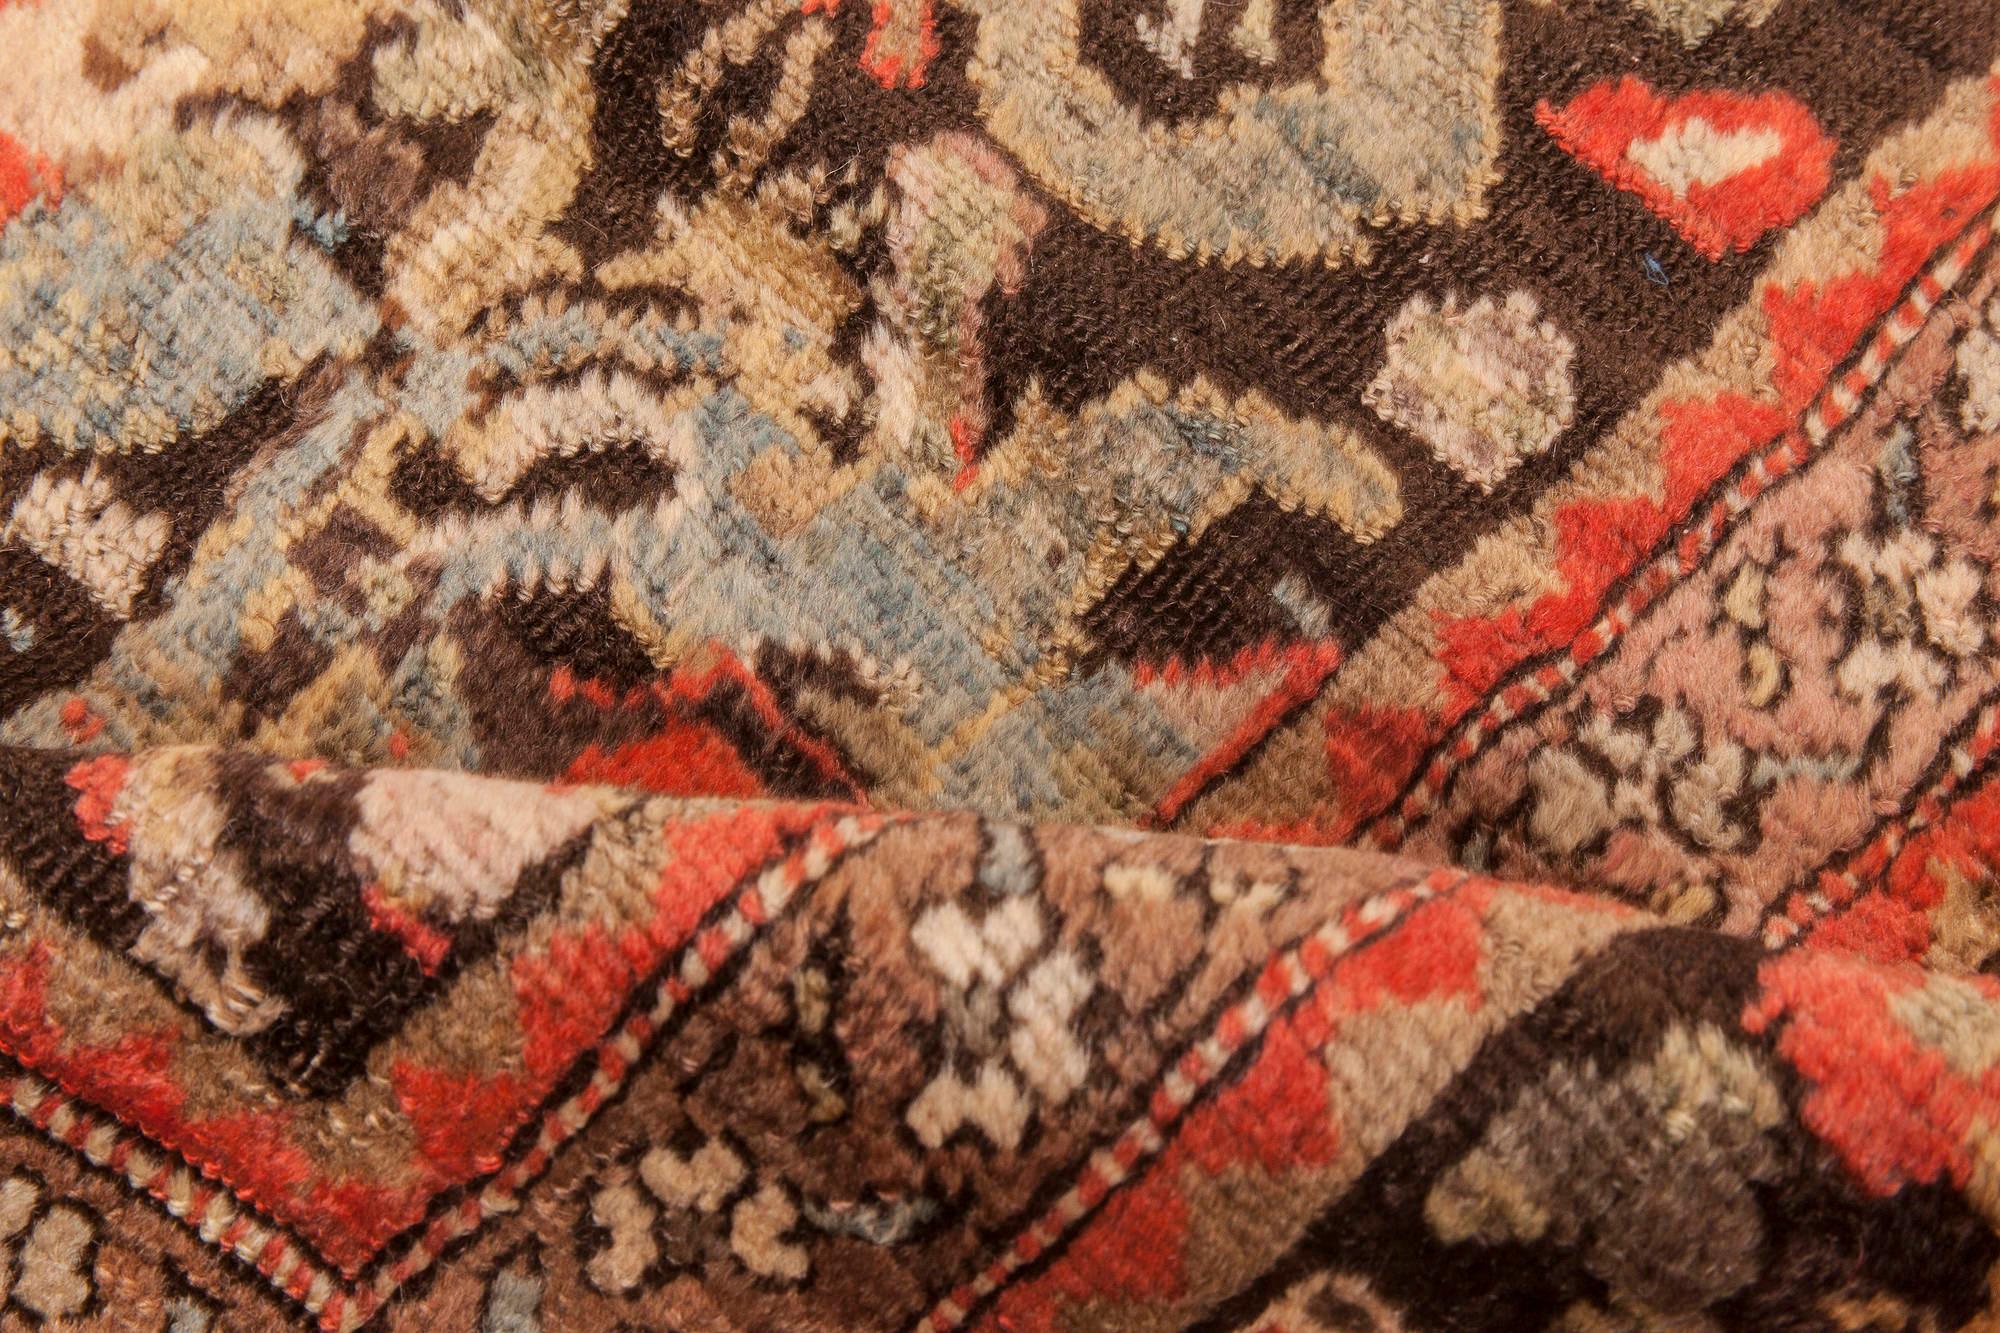 19th century Karabagh handmade wool carpet
Size: 6'10